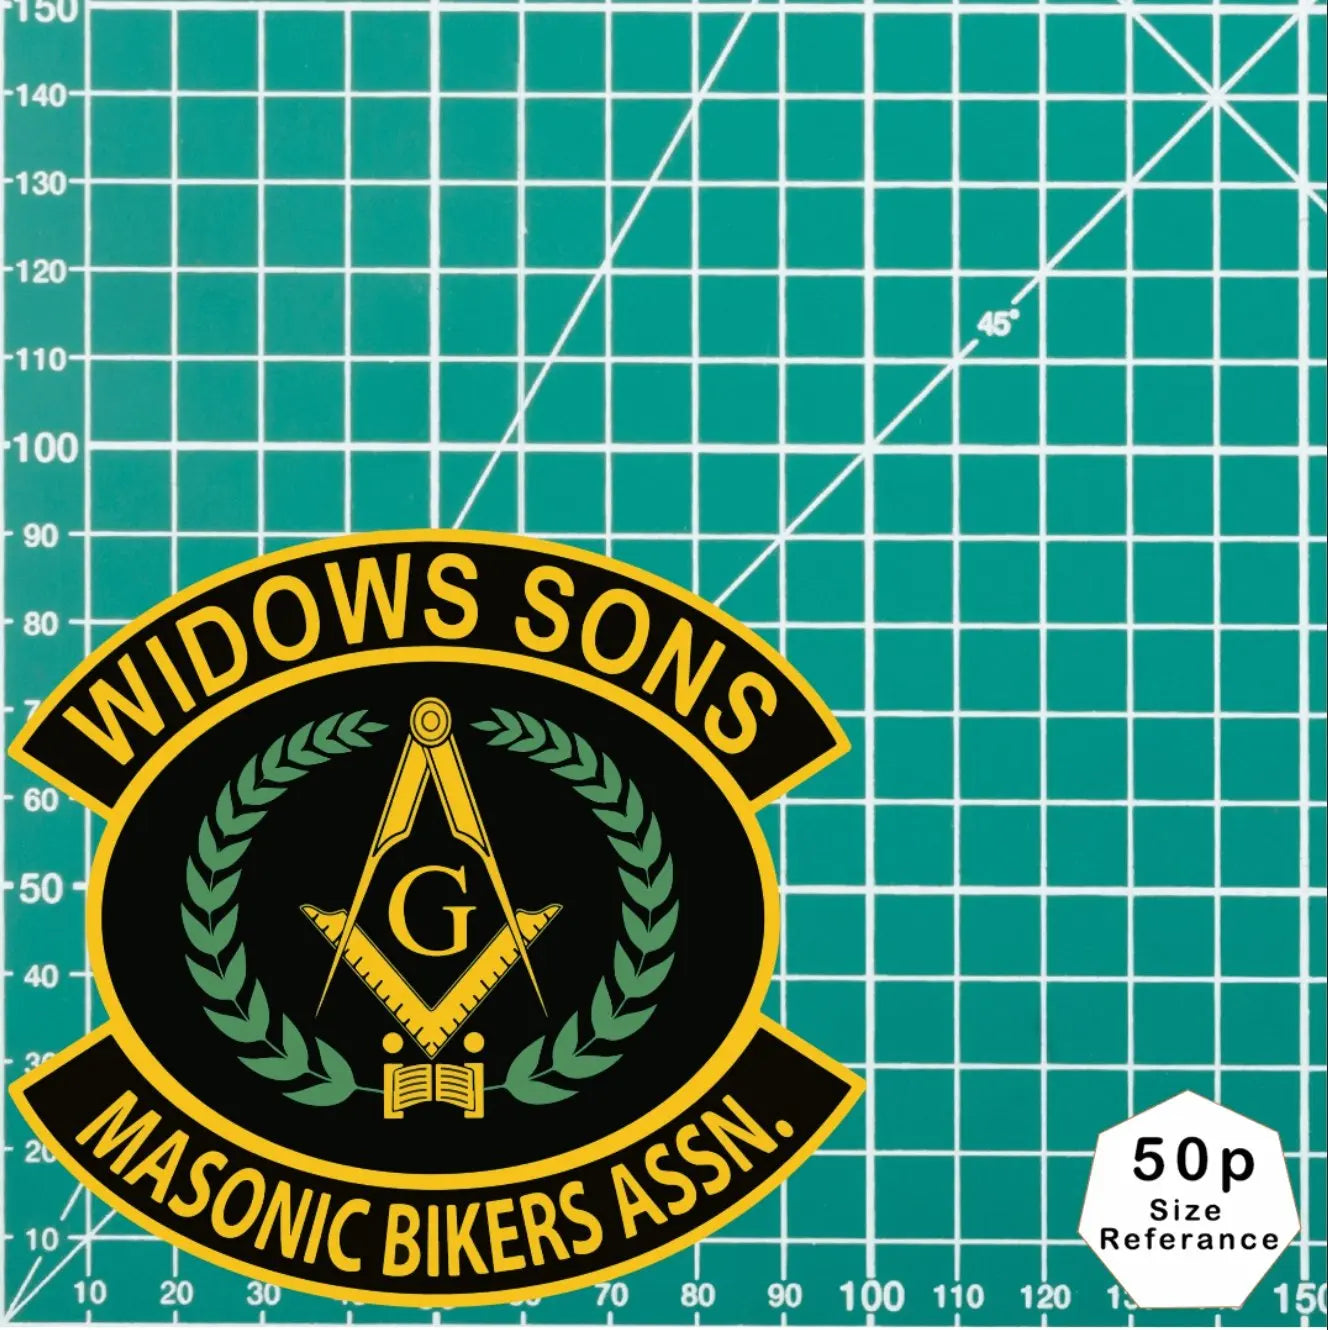 Widows Sons Vinyl Stickers/Decals - Red Plume